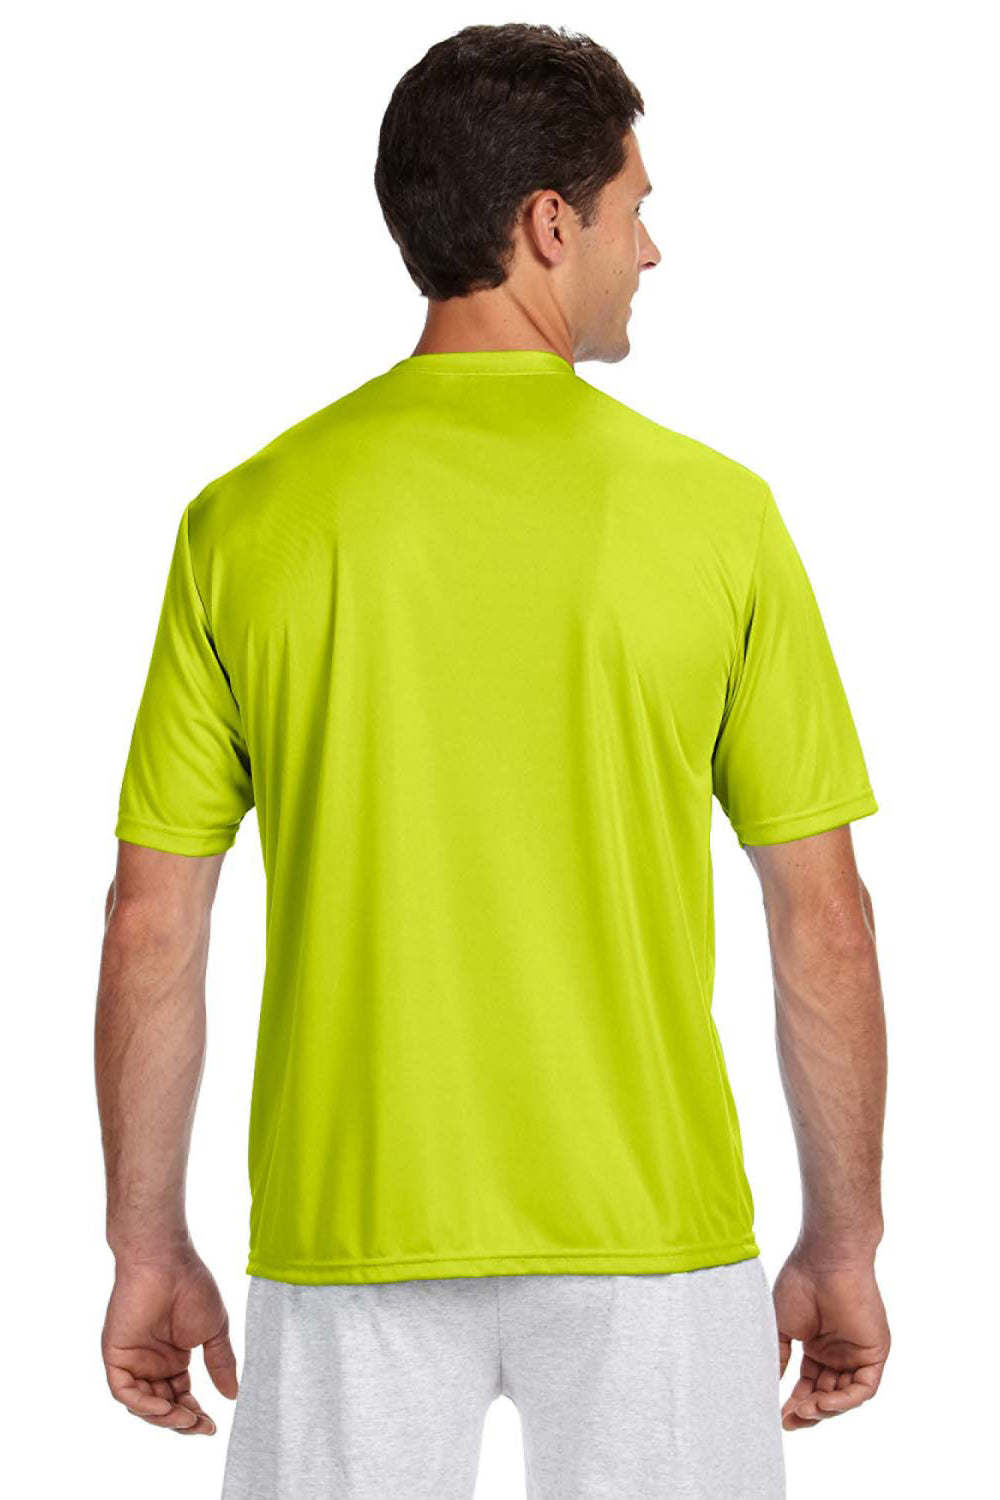 A4 N3142 Men's Cooling Performance T-Shirt - Navy - XL